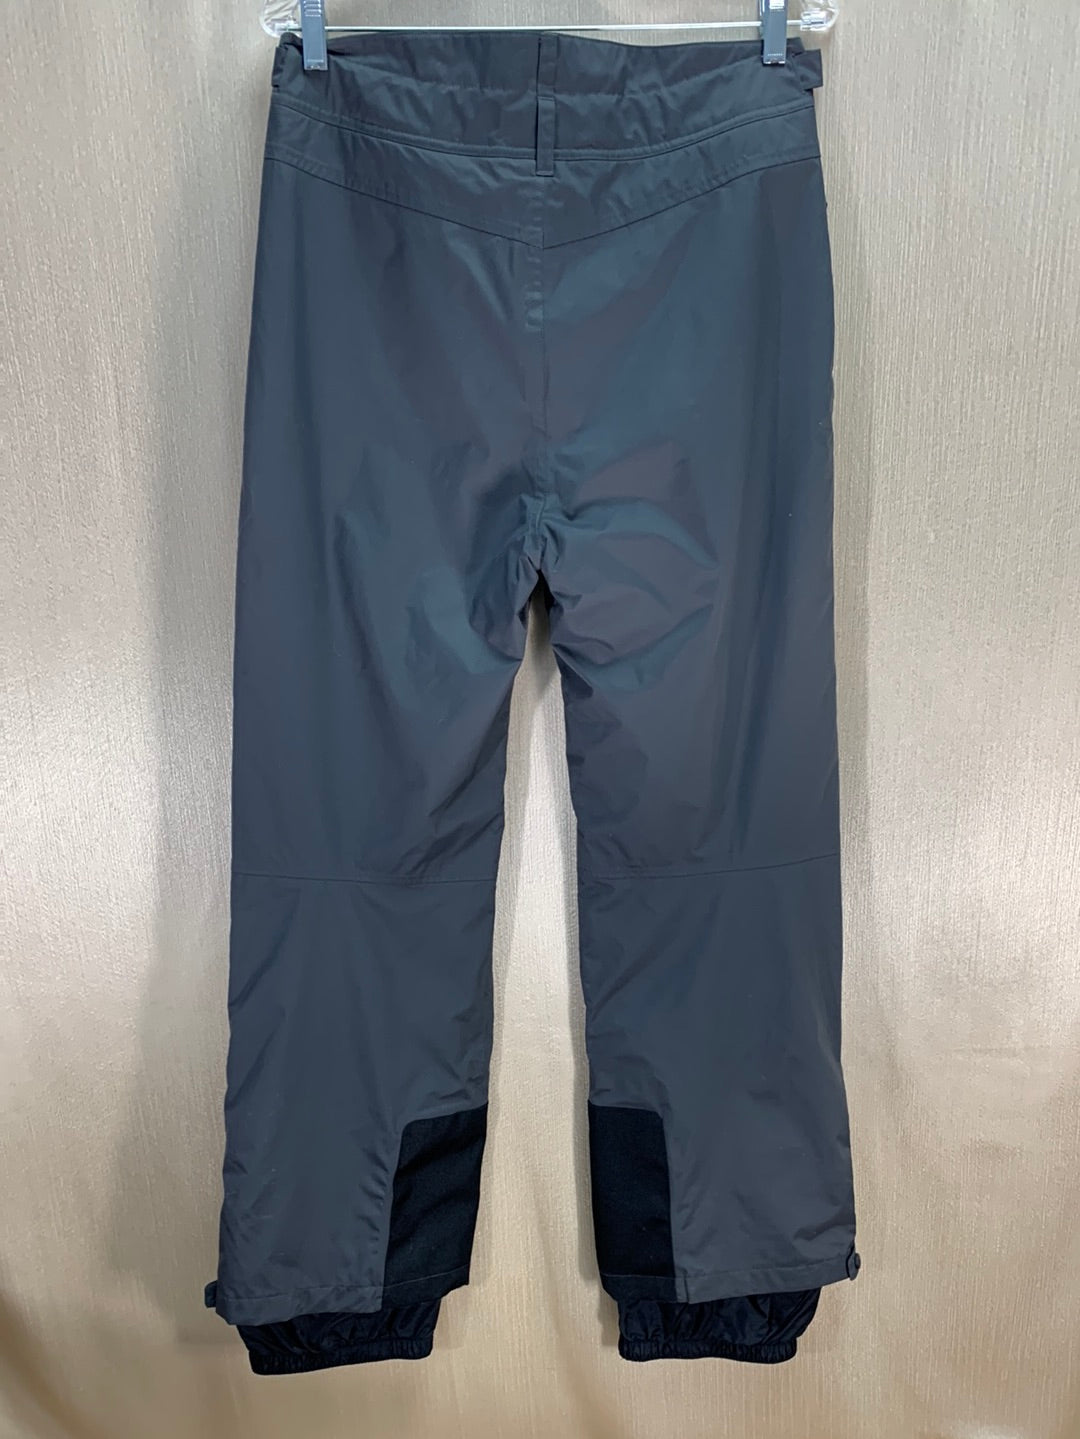  clothin Men's Insulated Ski Pant Fleece-Lined